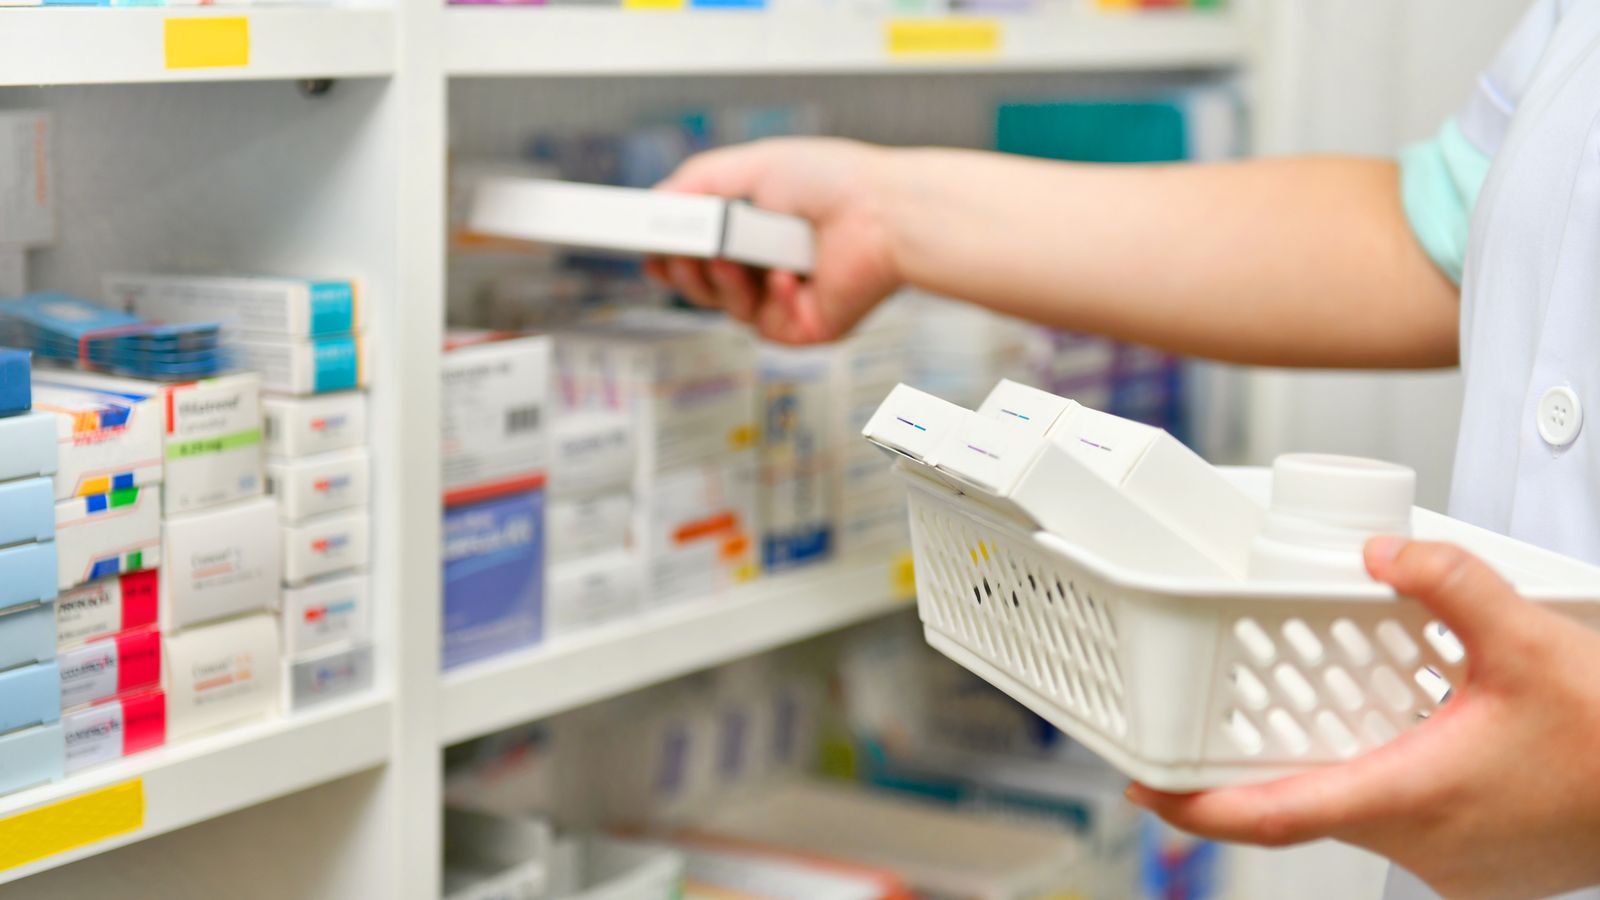 Coronavirus Pharmacies Urge Public To Only Buy Medicines They Need Amid Panic Buying Uk News Sky News